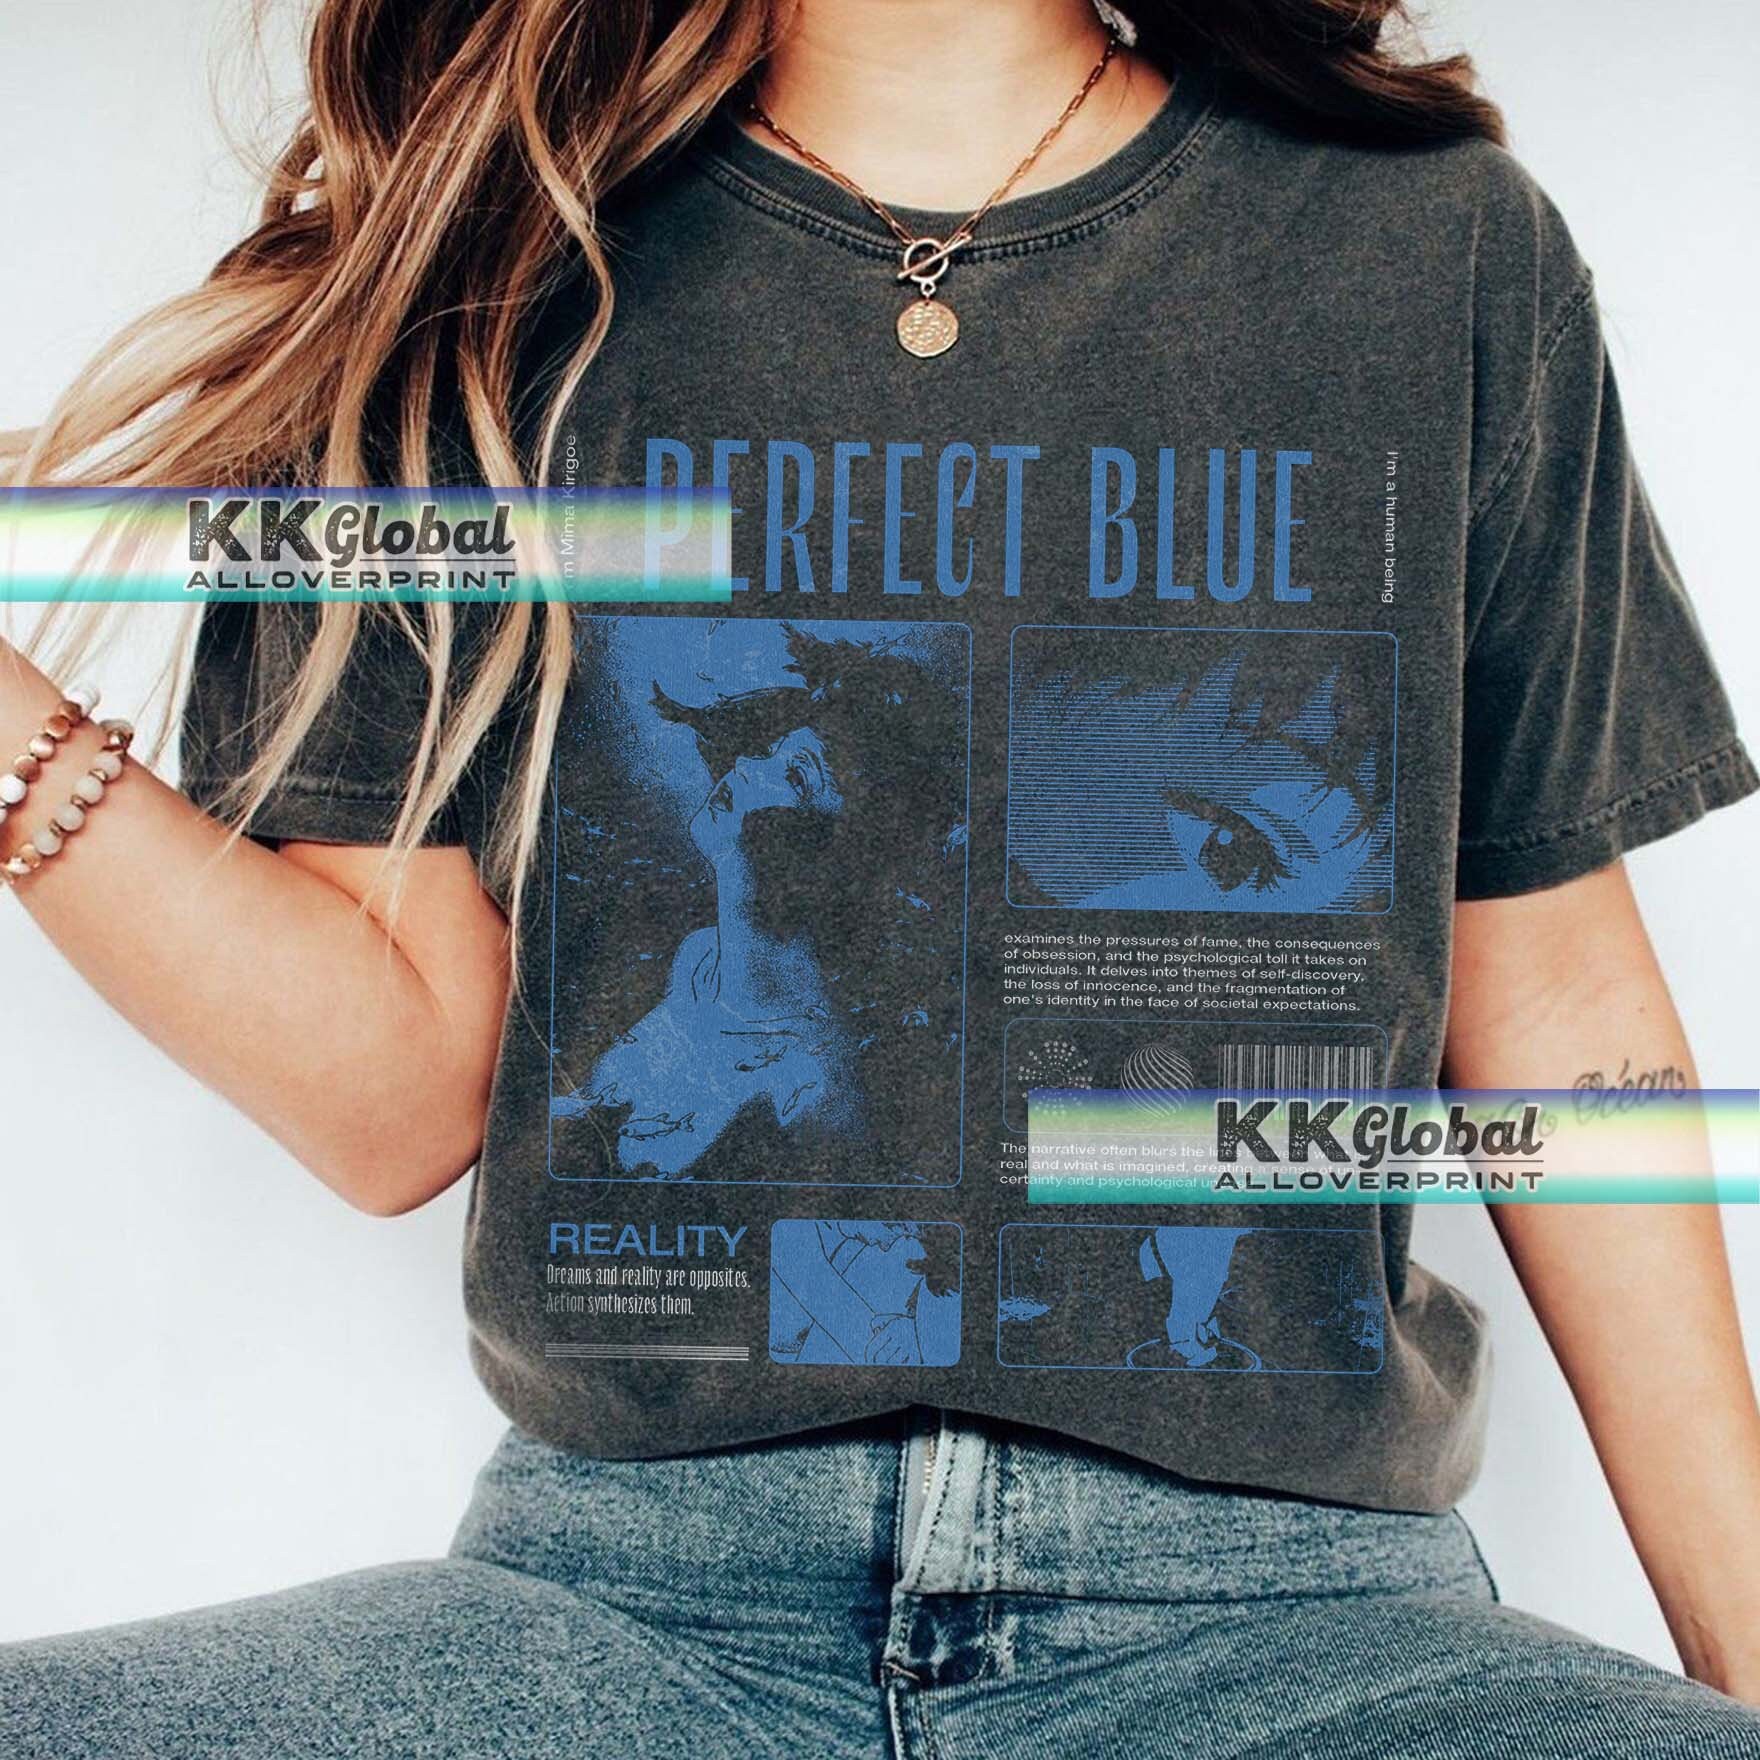 PERFECT BLUE Mima Kirigoe Shirt Perfect Blue Homage Tshirt 